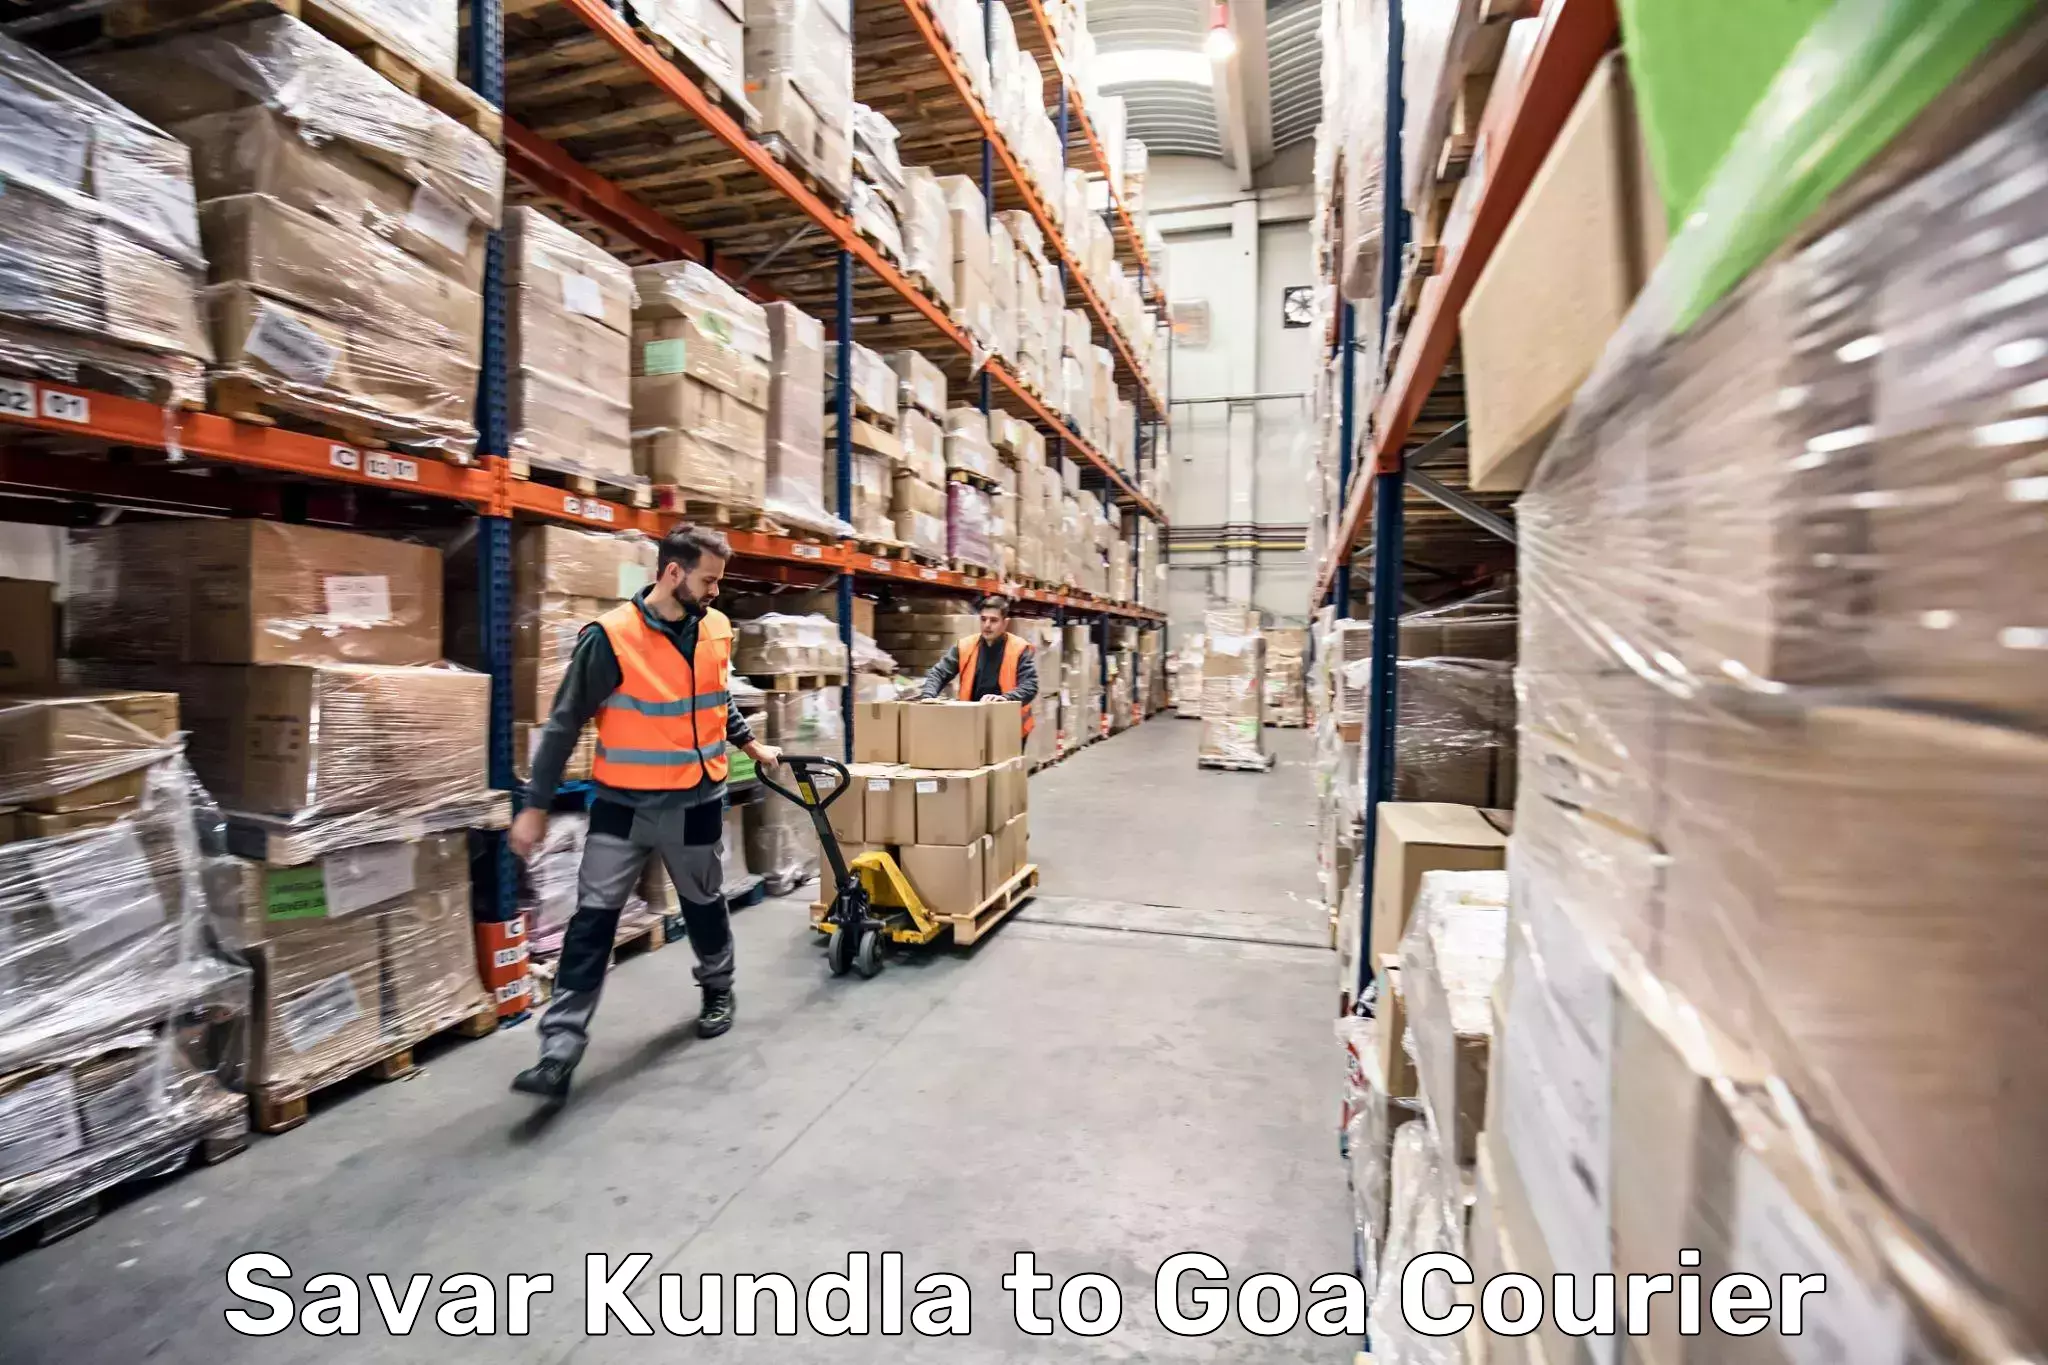 Luggage delivery providers Savar Kundla to Goa